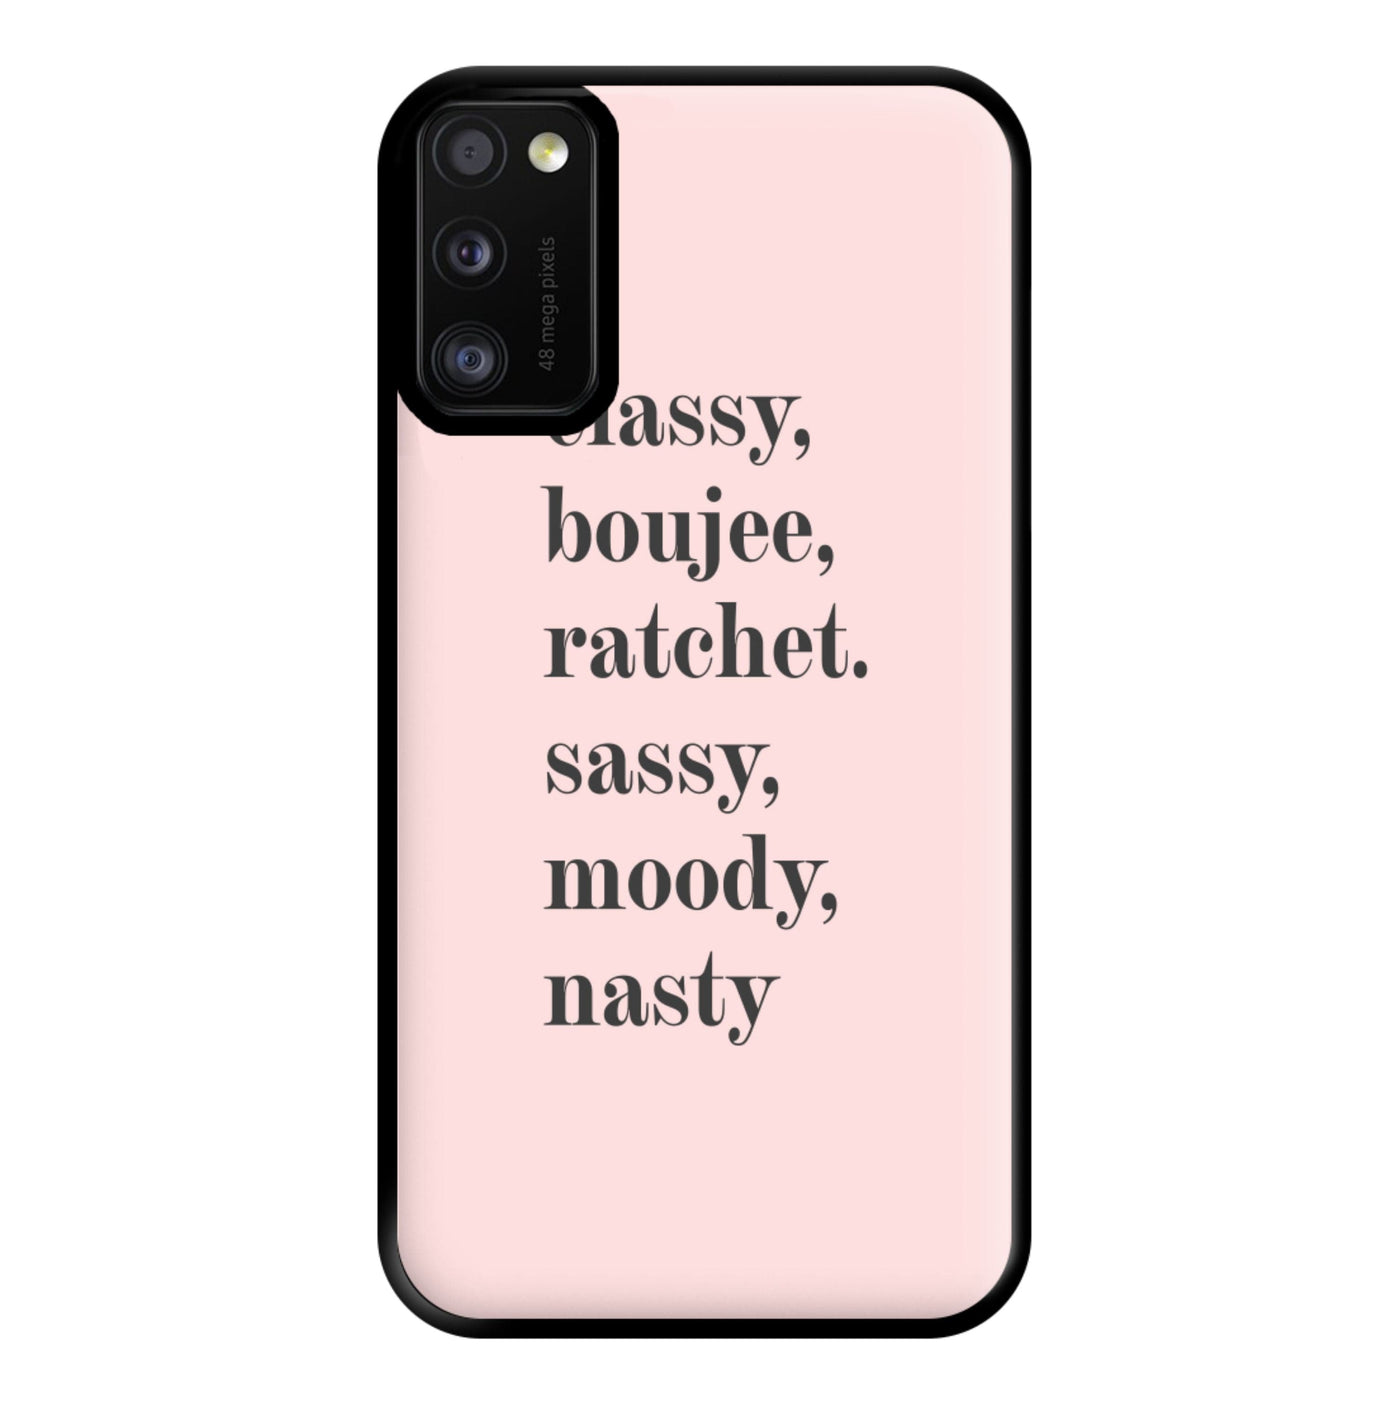 Classy Boujee Ratchet. Sassy Moddy Nasty - TikTok Phone Case